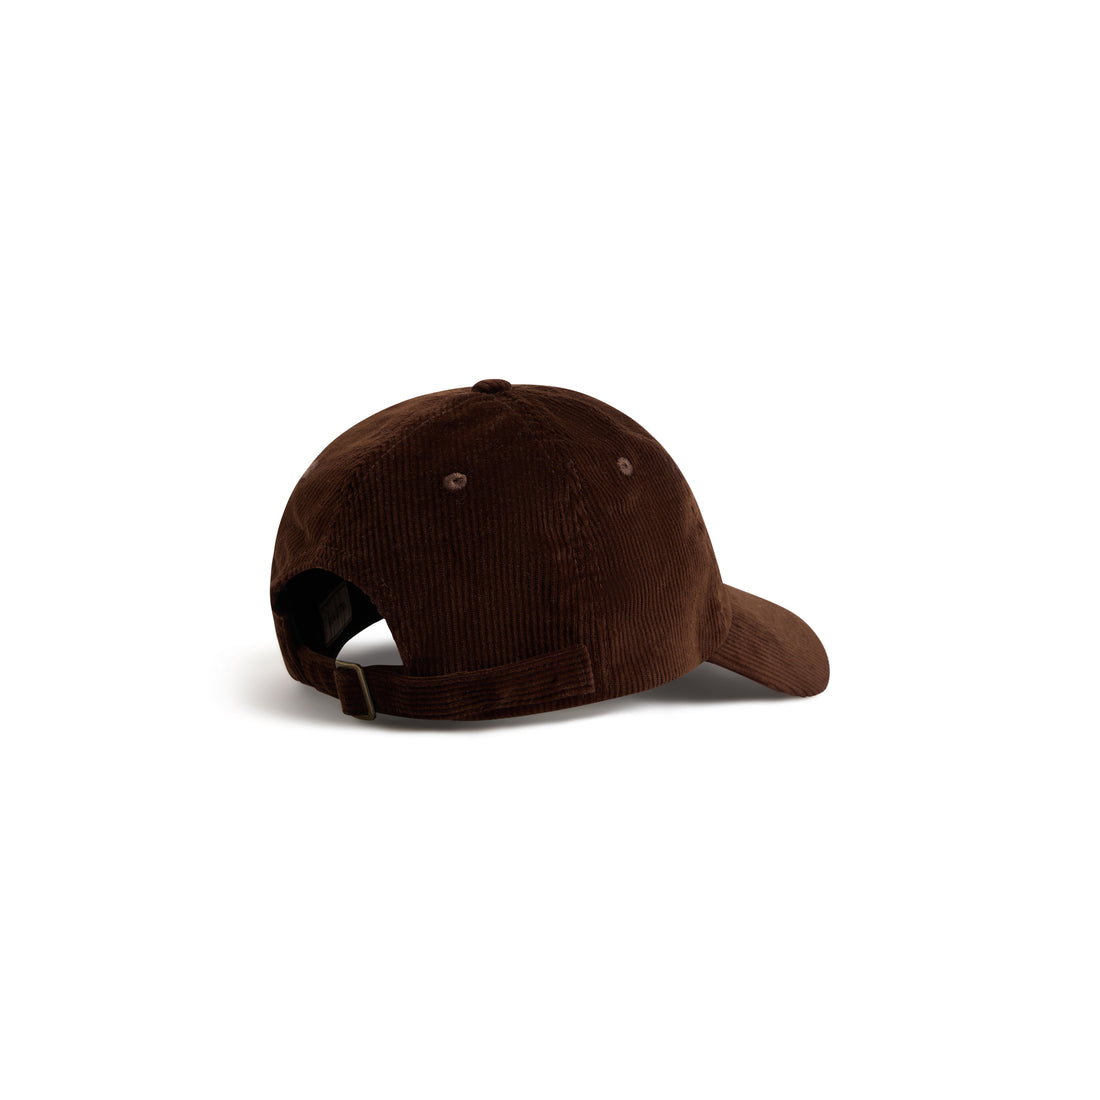 The brown corduroy cap